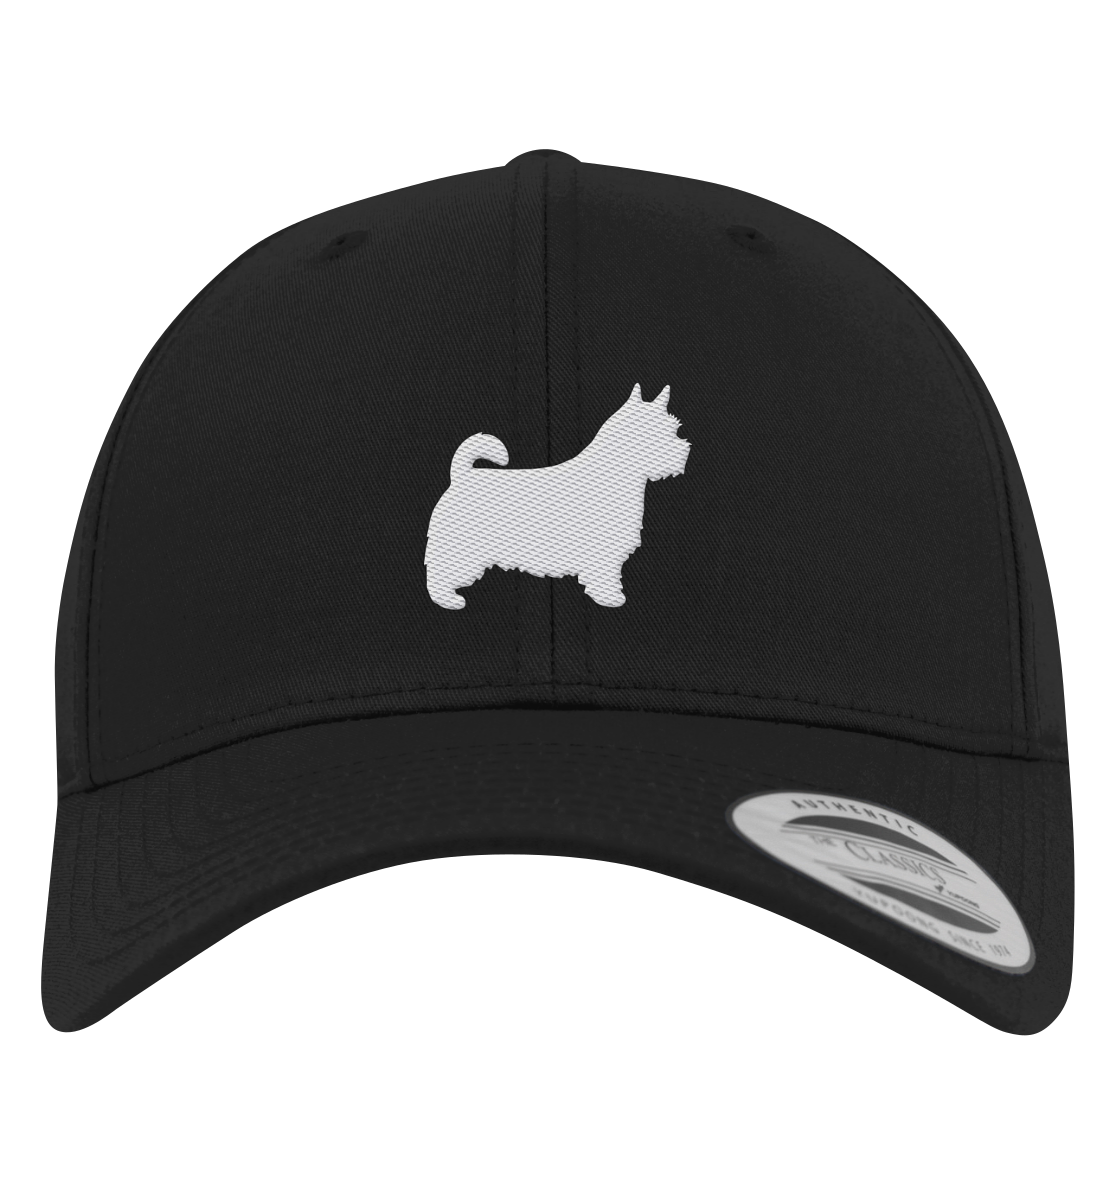 Norwich Terrier-Silhouette - Premium Baseball Cap